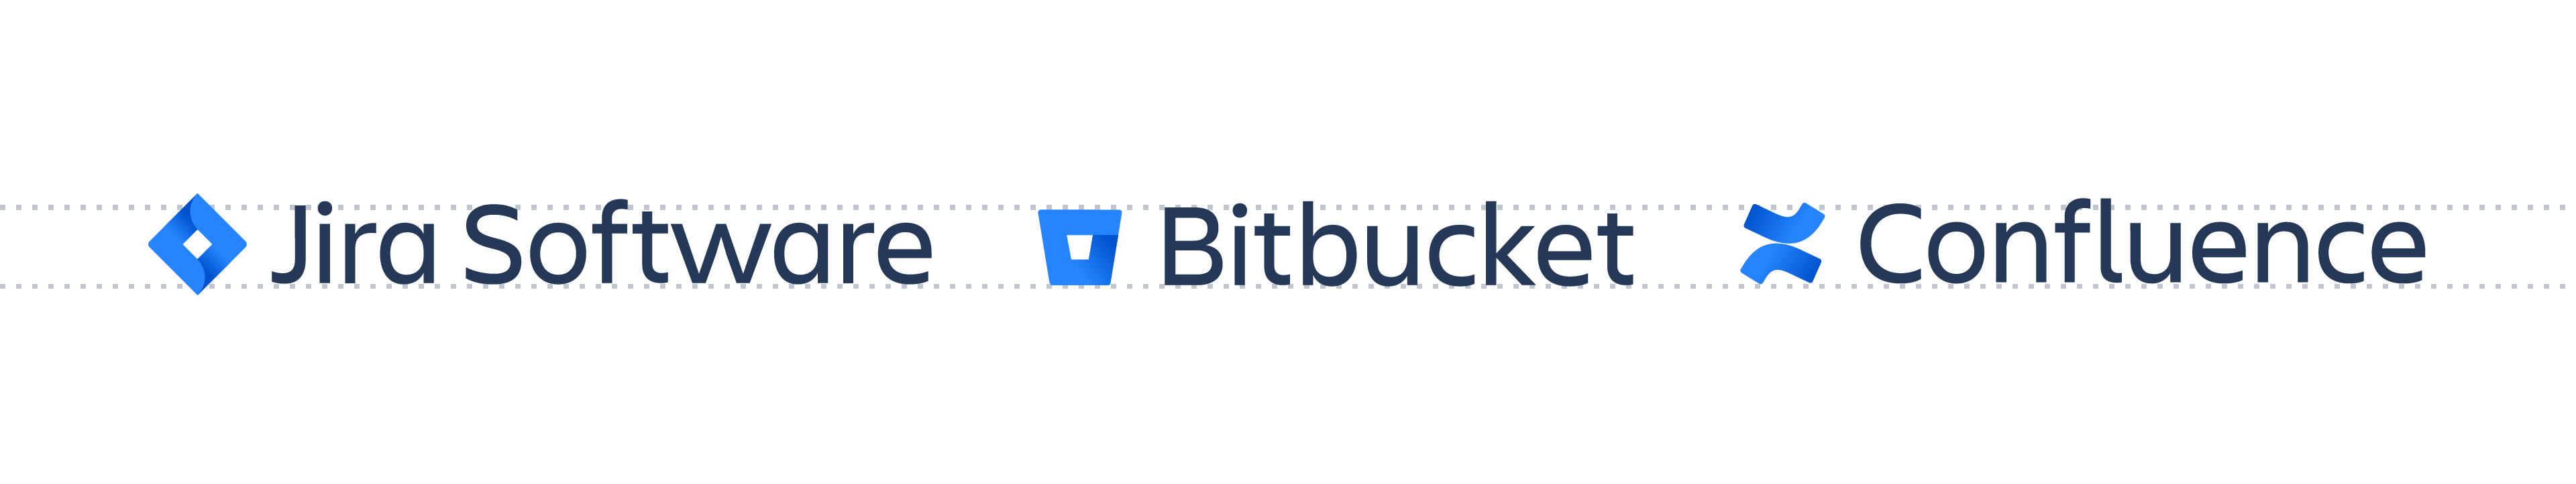 Bitbucket Logo - Logos - Atlassian Design